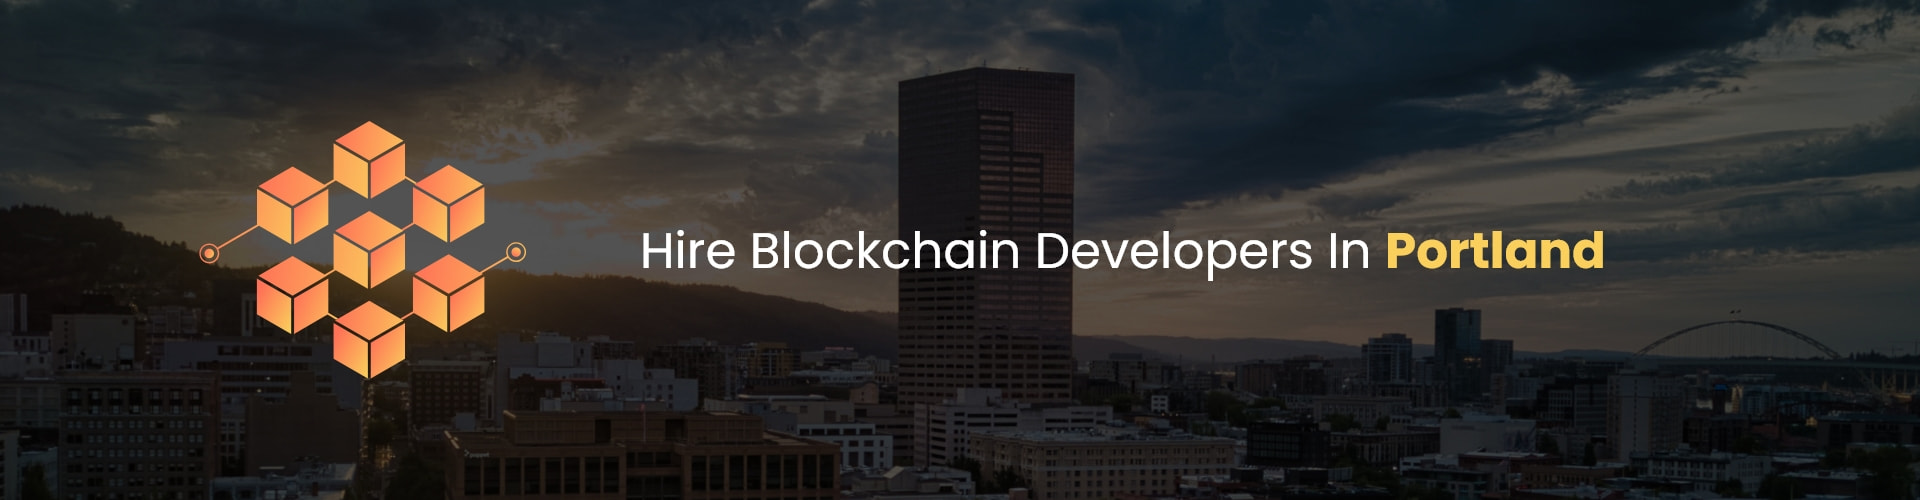 hire blockchain developers in portland